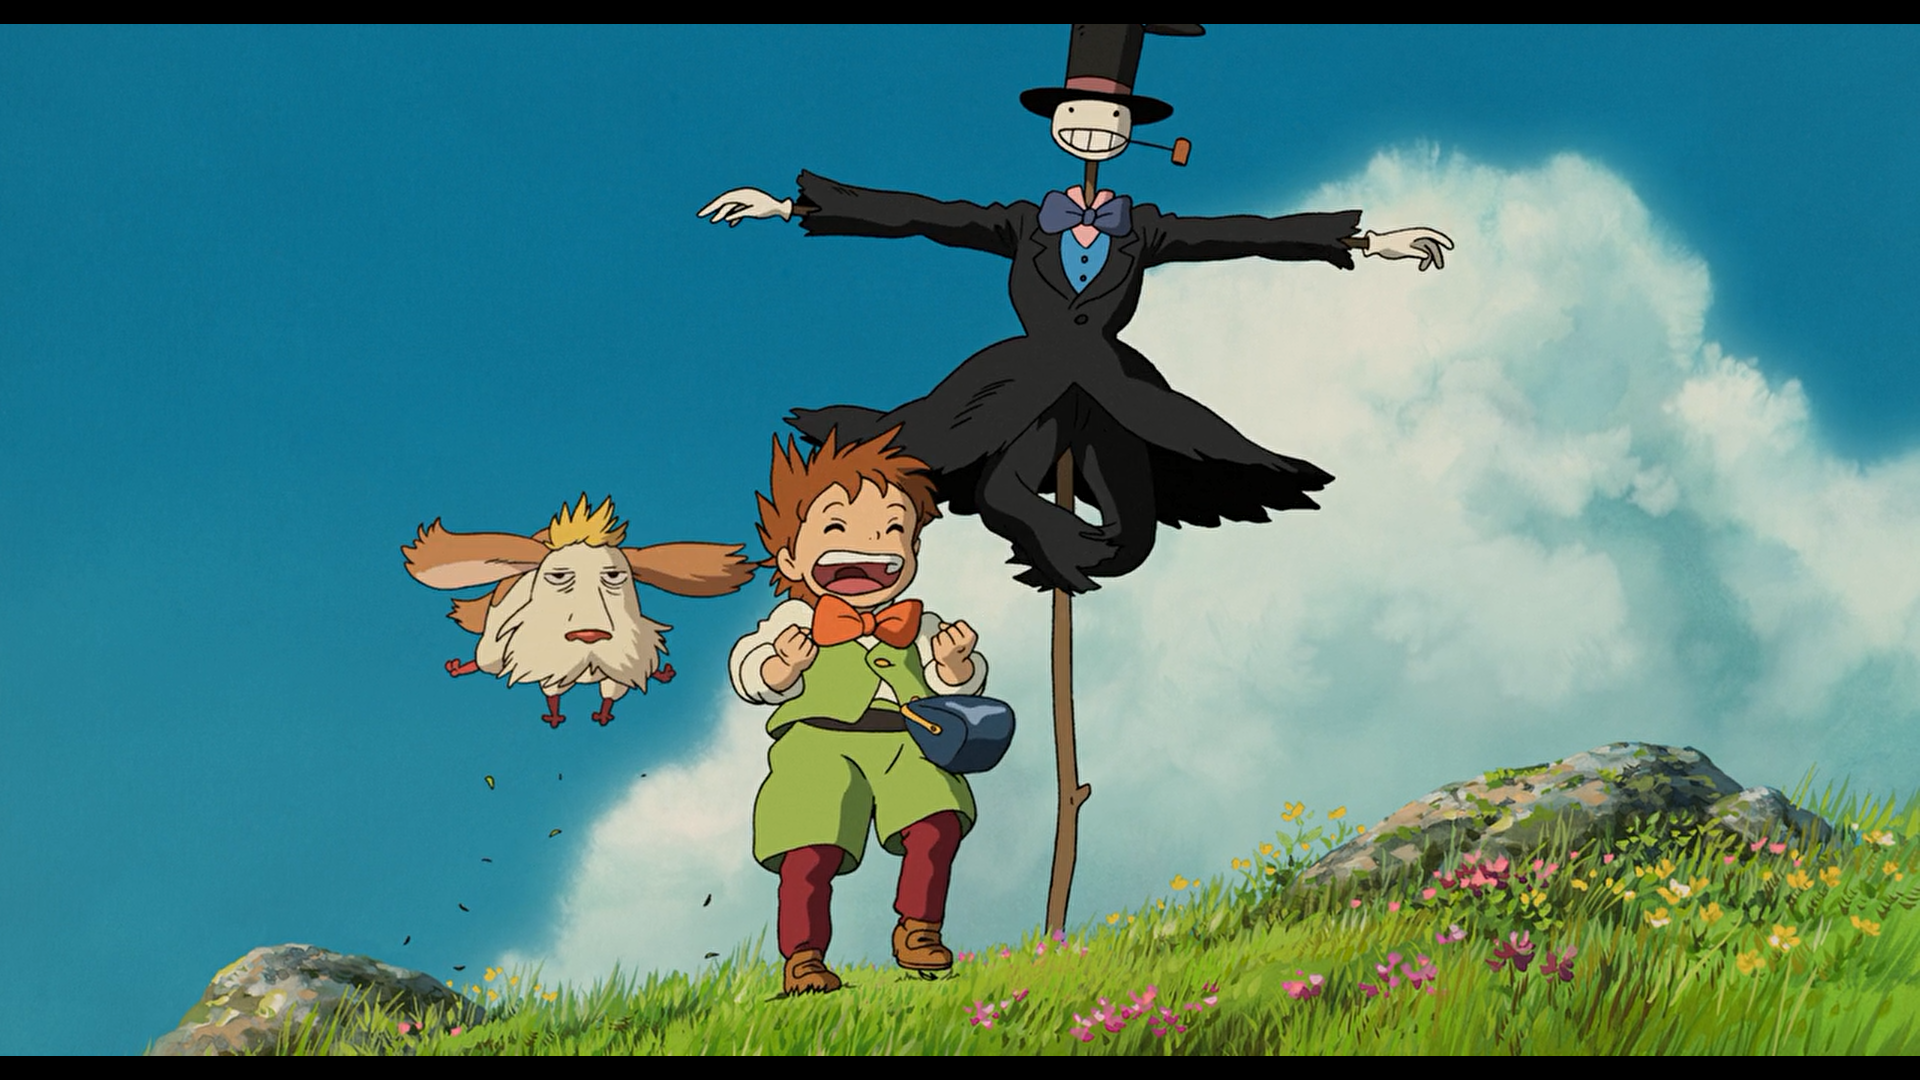 Anime 1920x1080 Howl's Moving Castle Miyazaki Hayao clear sky grass rocks smiling open mouth dog anime anime girls anime screenshot